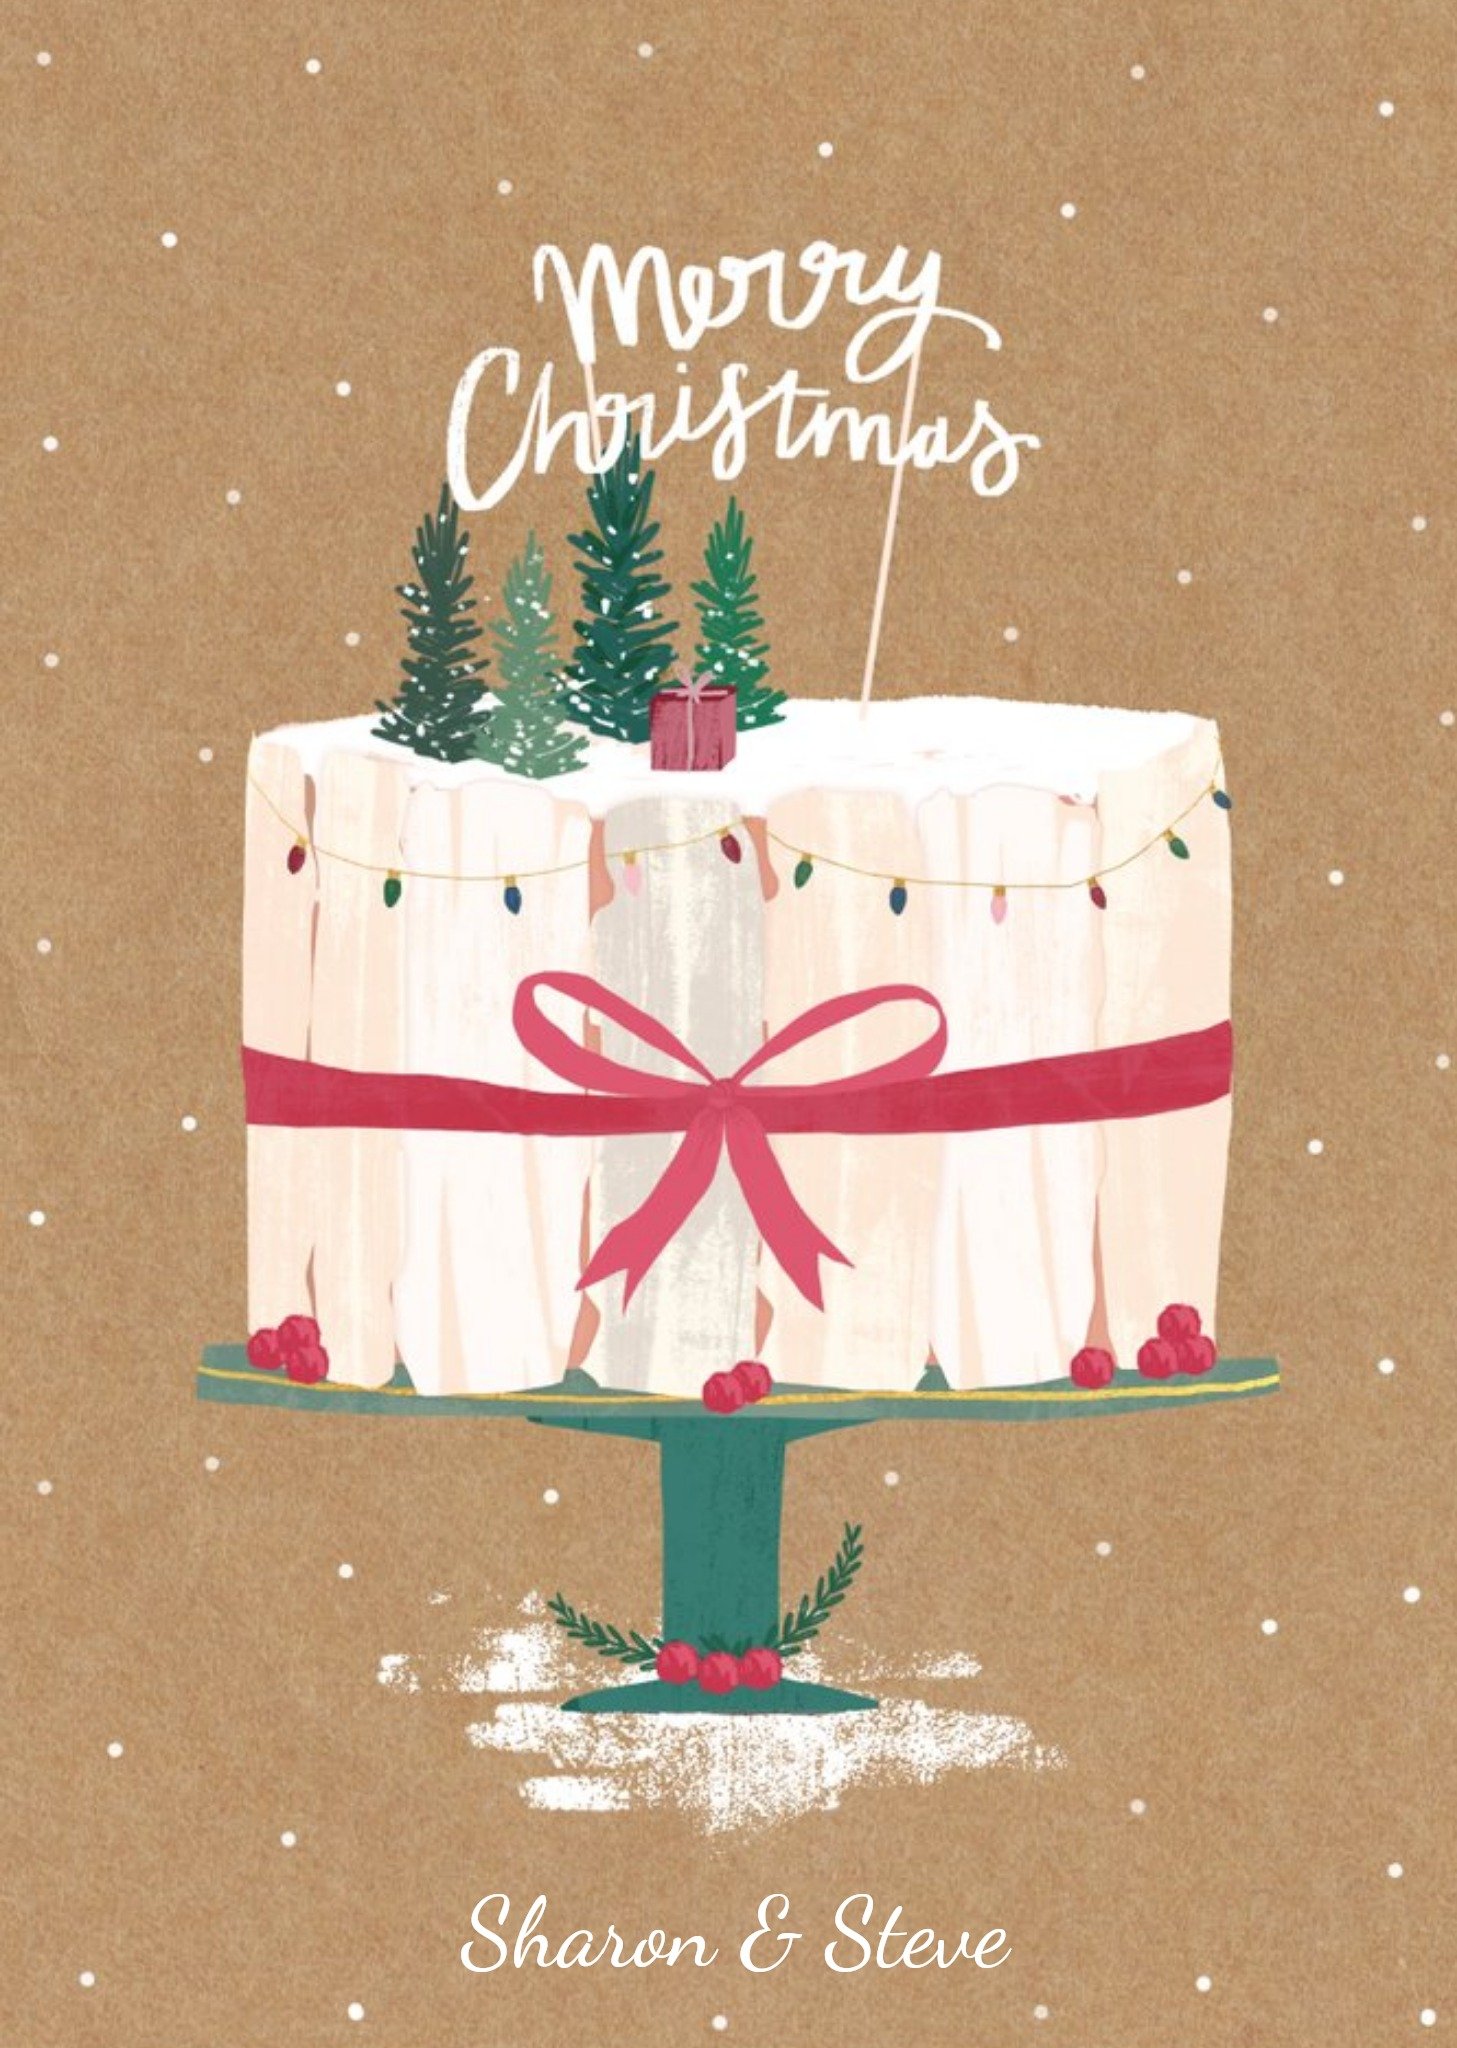 Moonpig Christmas Cake Personalised Greetings Card Ecard